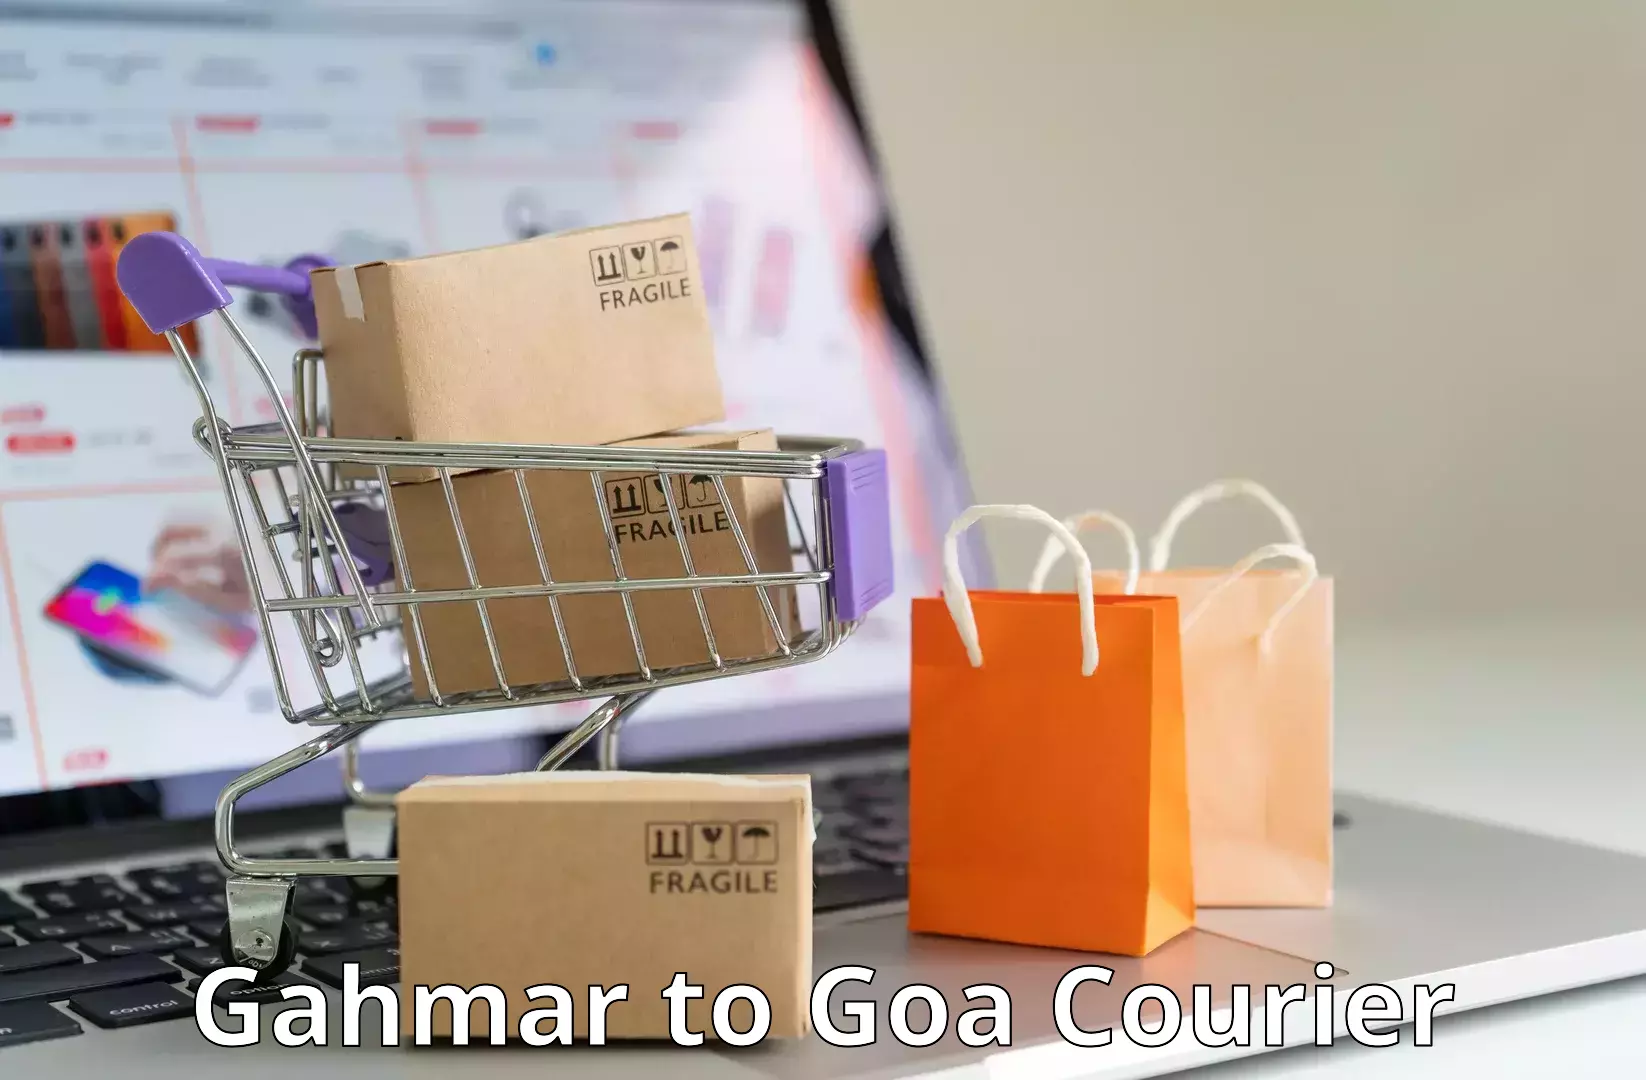 Custom courier packaging Gahmar to Goa